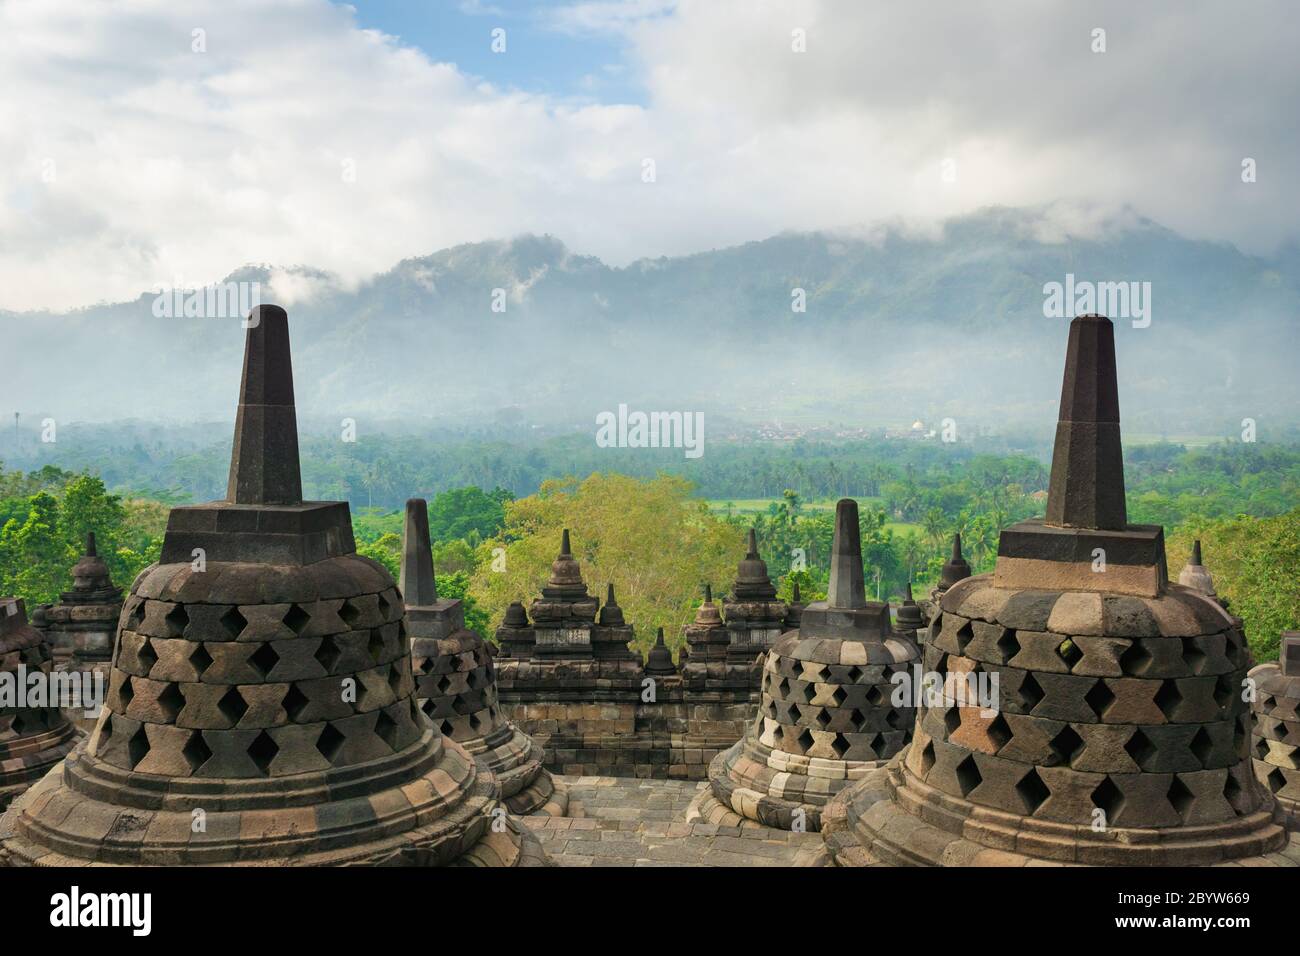 Borobudur Tempel in Yogyakarta, Java, Indonesien - UNESCO-Weltkulturerbe beliebt bei Touristen Stockfoto